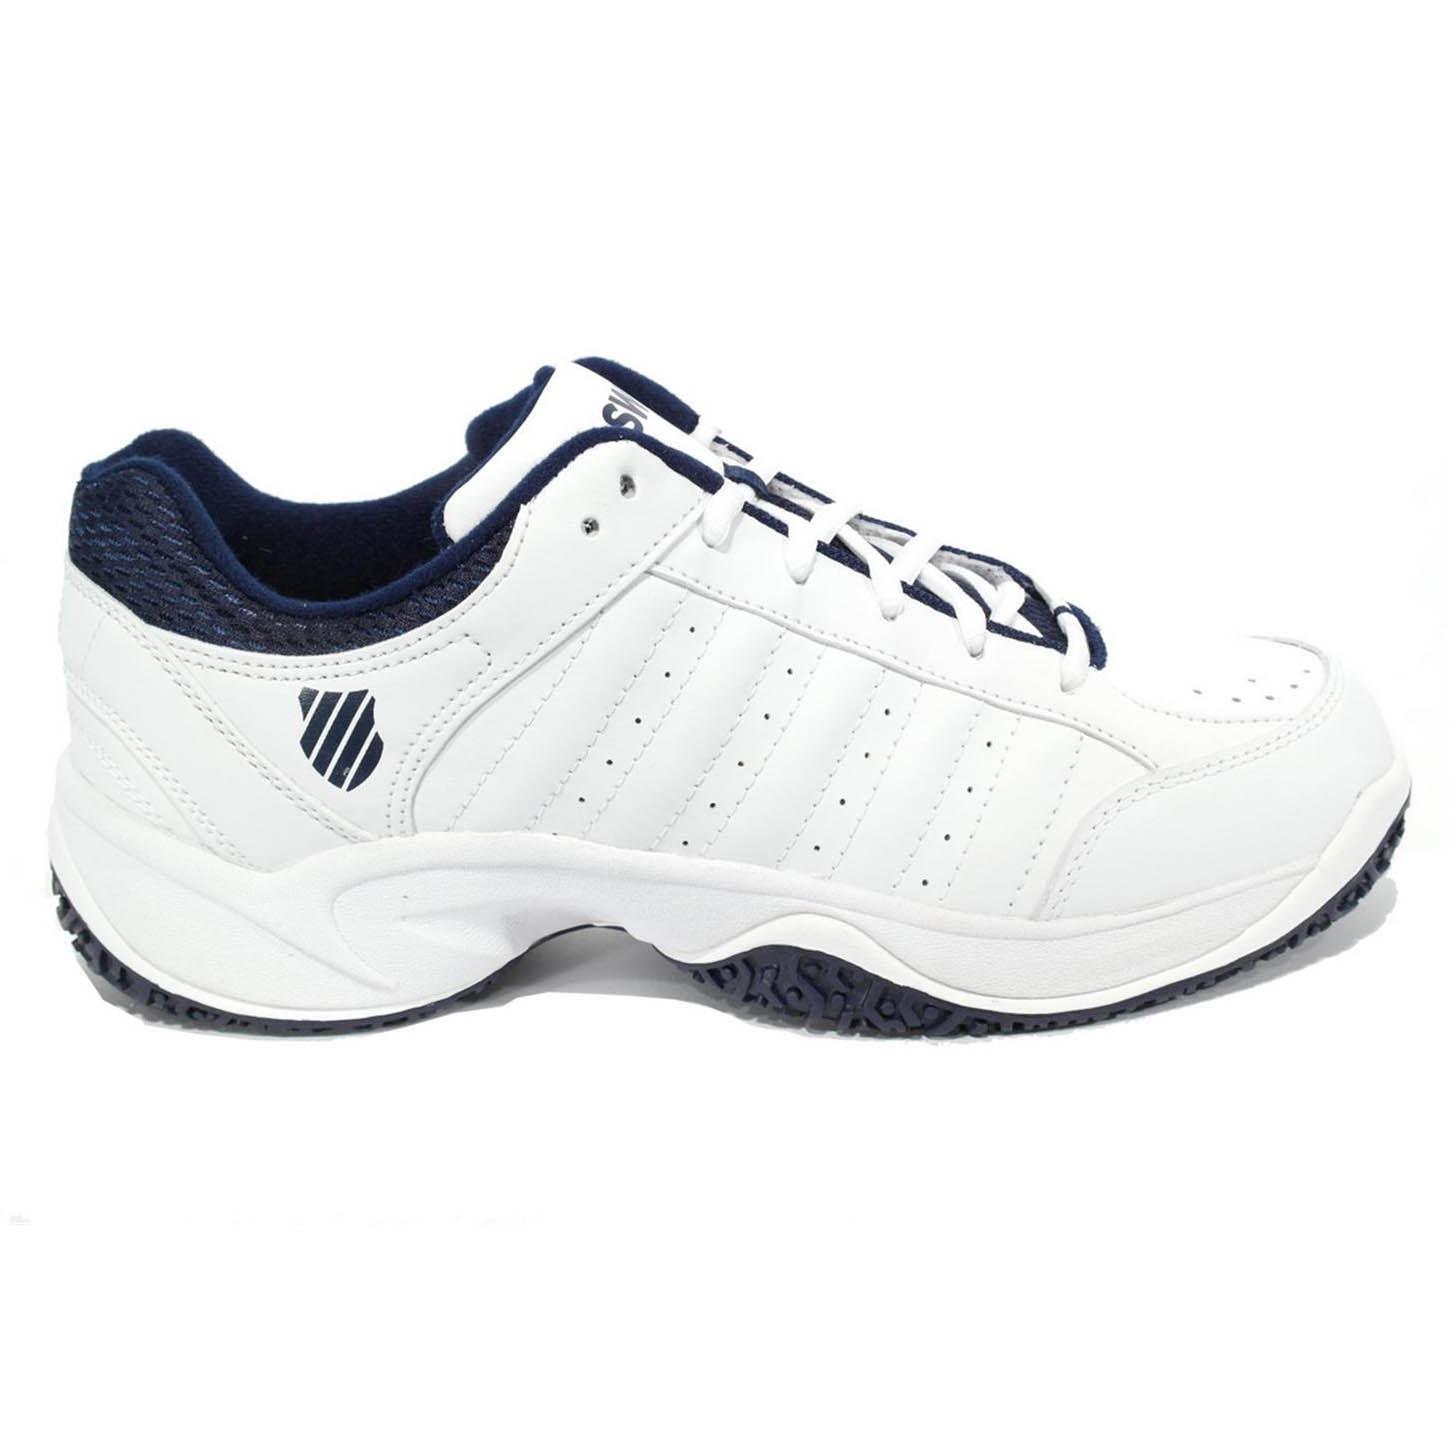 K-Swiss Mens Grancourt III Omni Tennis Shoes - White/Navy - Tennisnuts.com